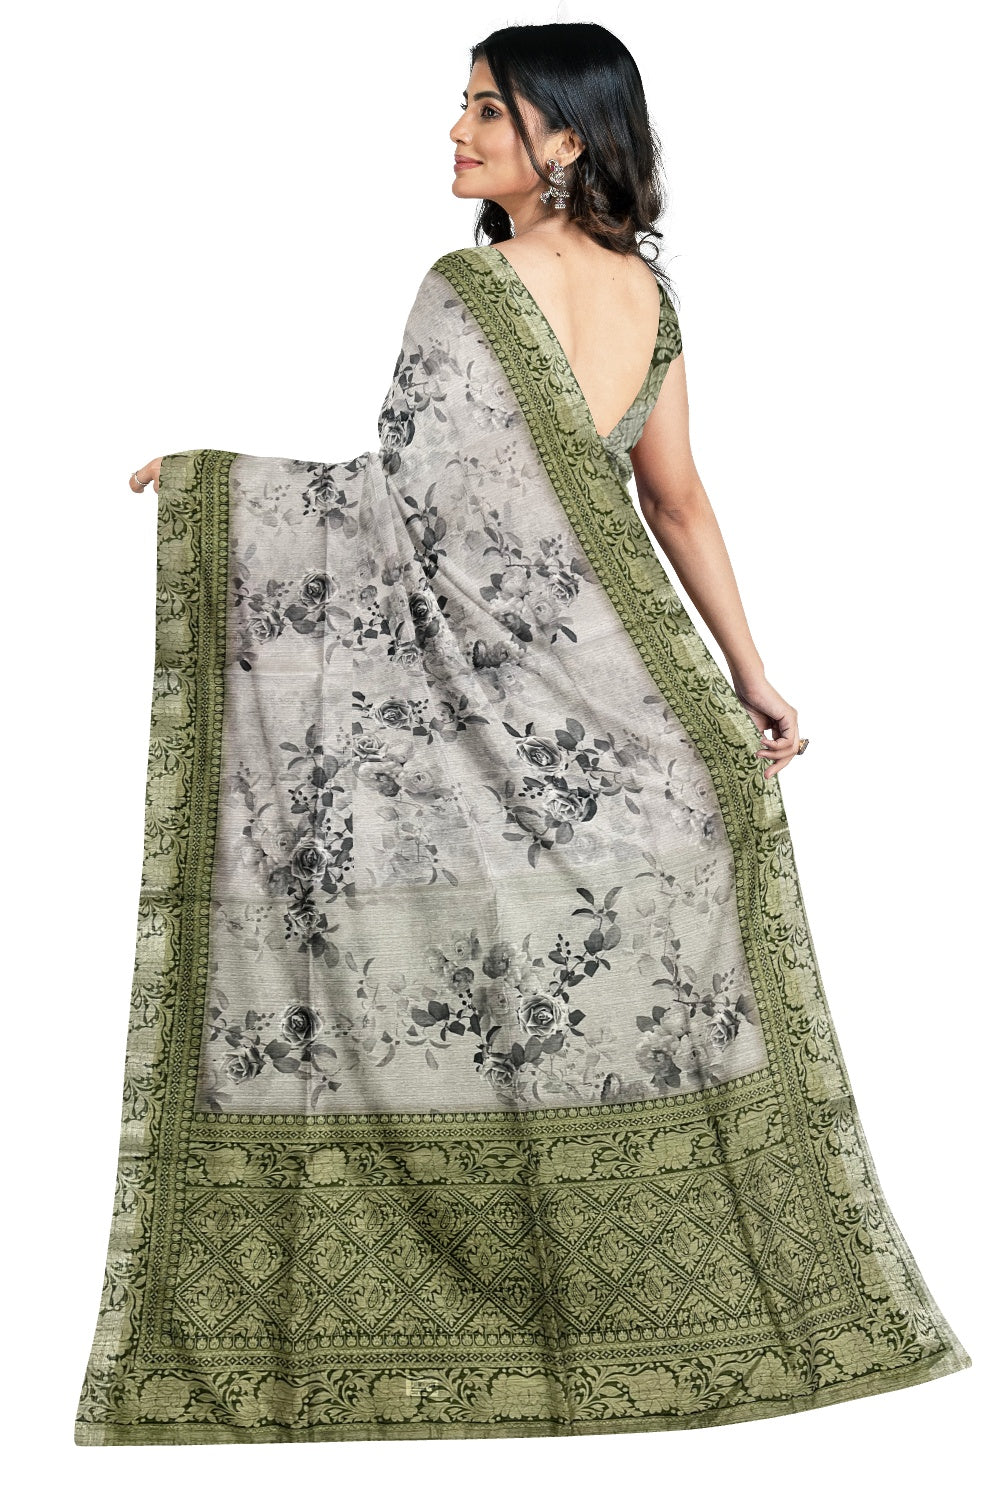 Southloom Art Silk Grey Floral Printed Designer Saree with Green Pallu